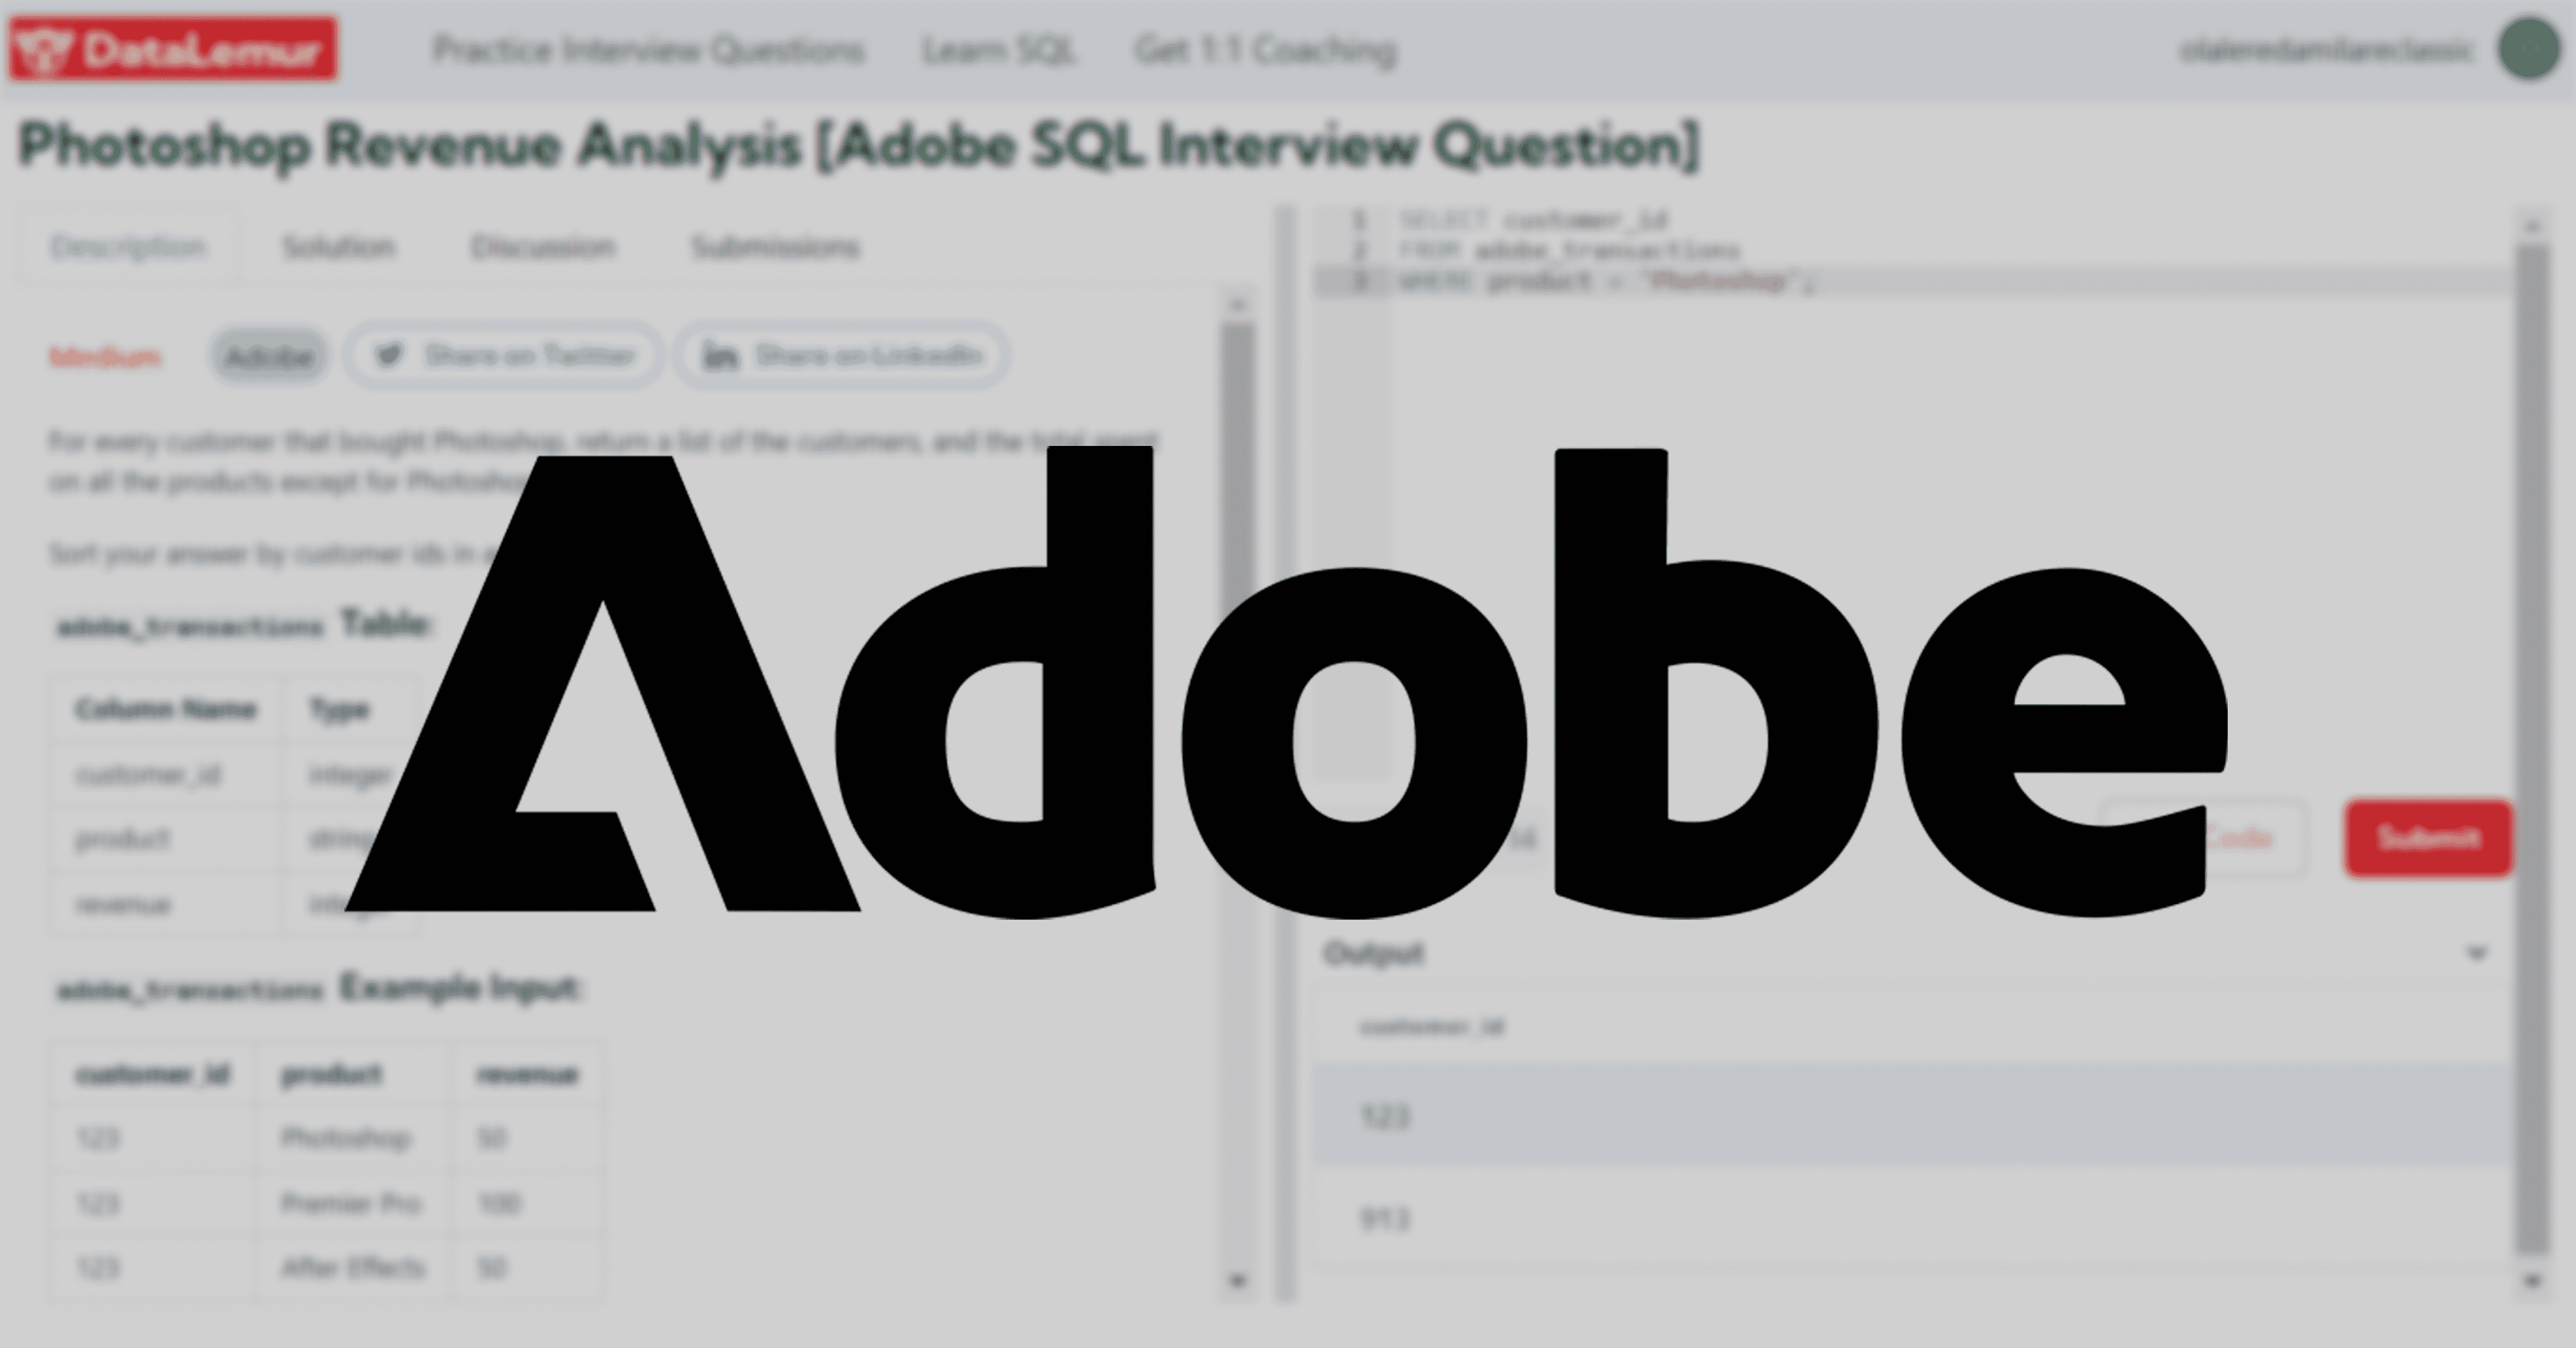 Adobe SQL Interview Question